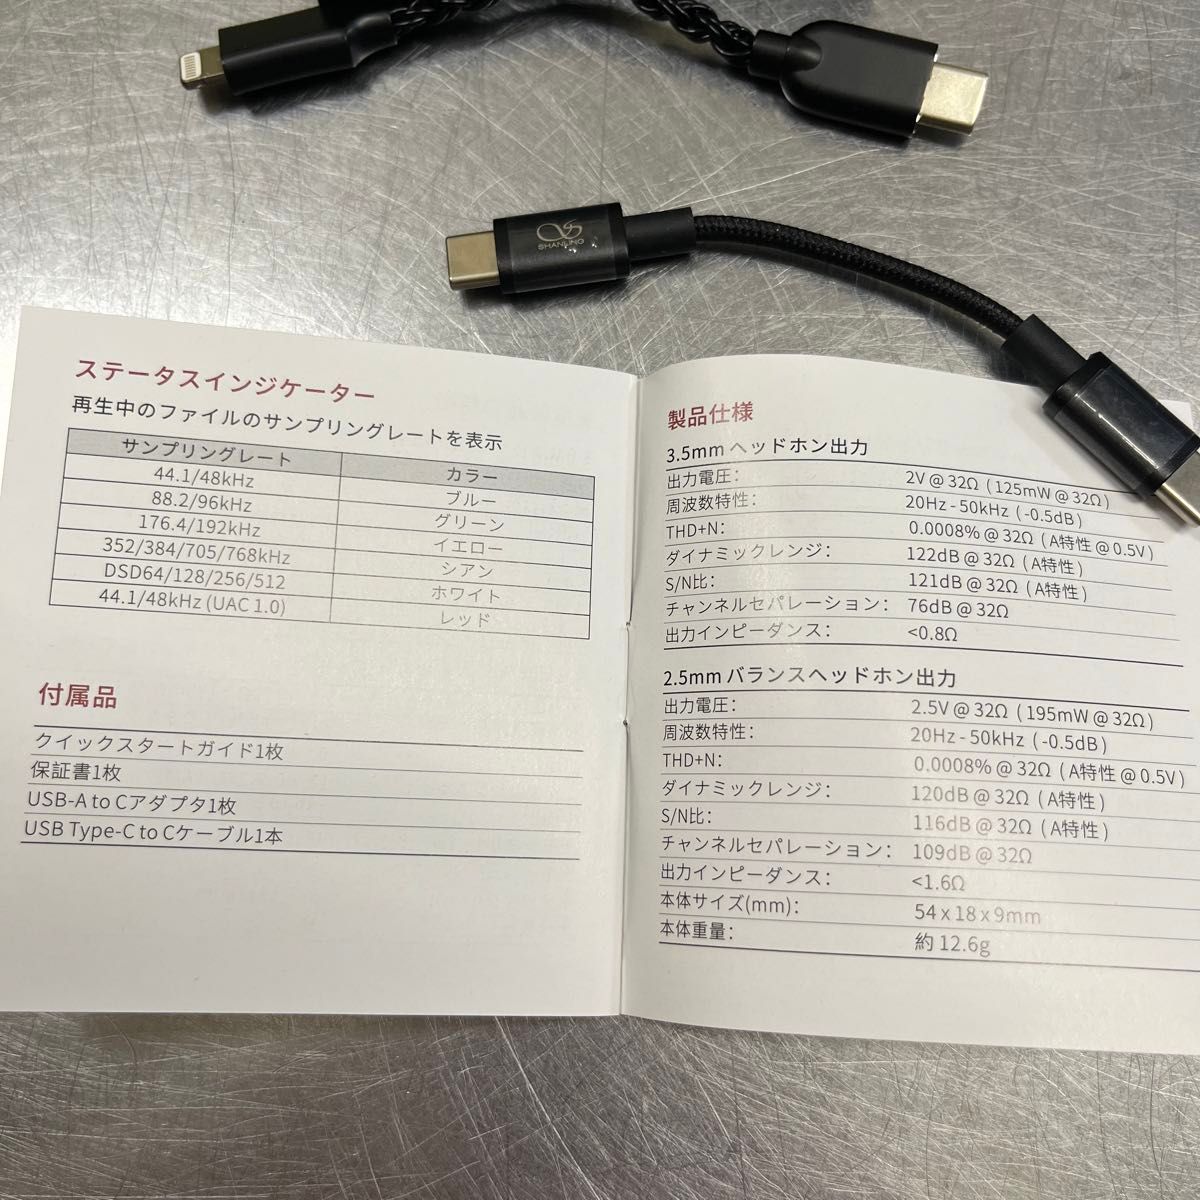 SHANLING  UA2  ハイレゾ対応 ヘッドホンアンプ  別売 USB-C to Lightningケーブル 付